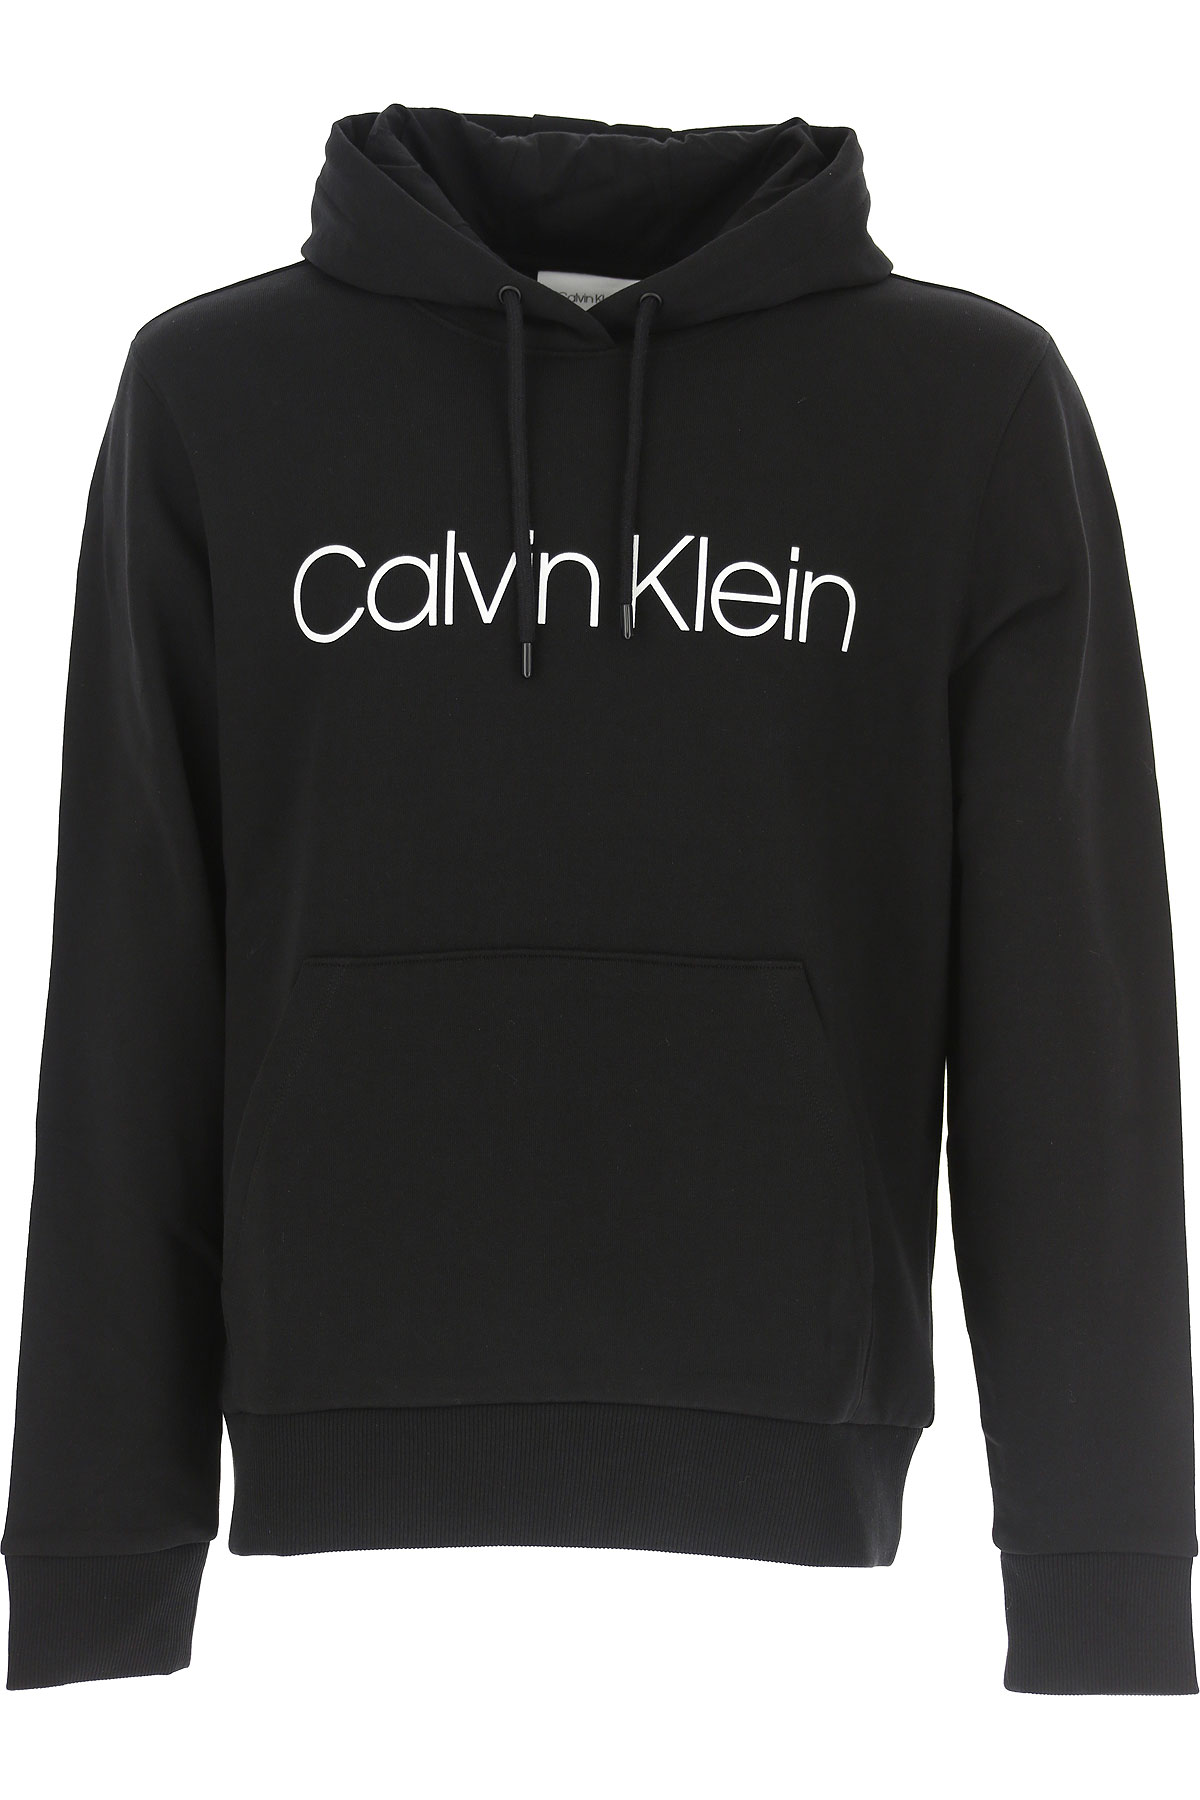 Mens Clothing Calvin Klein, Style code: k10k103664-013-